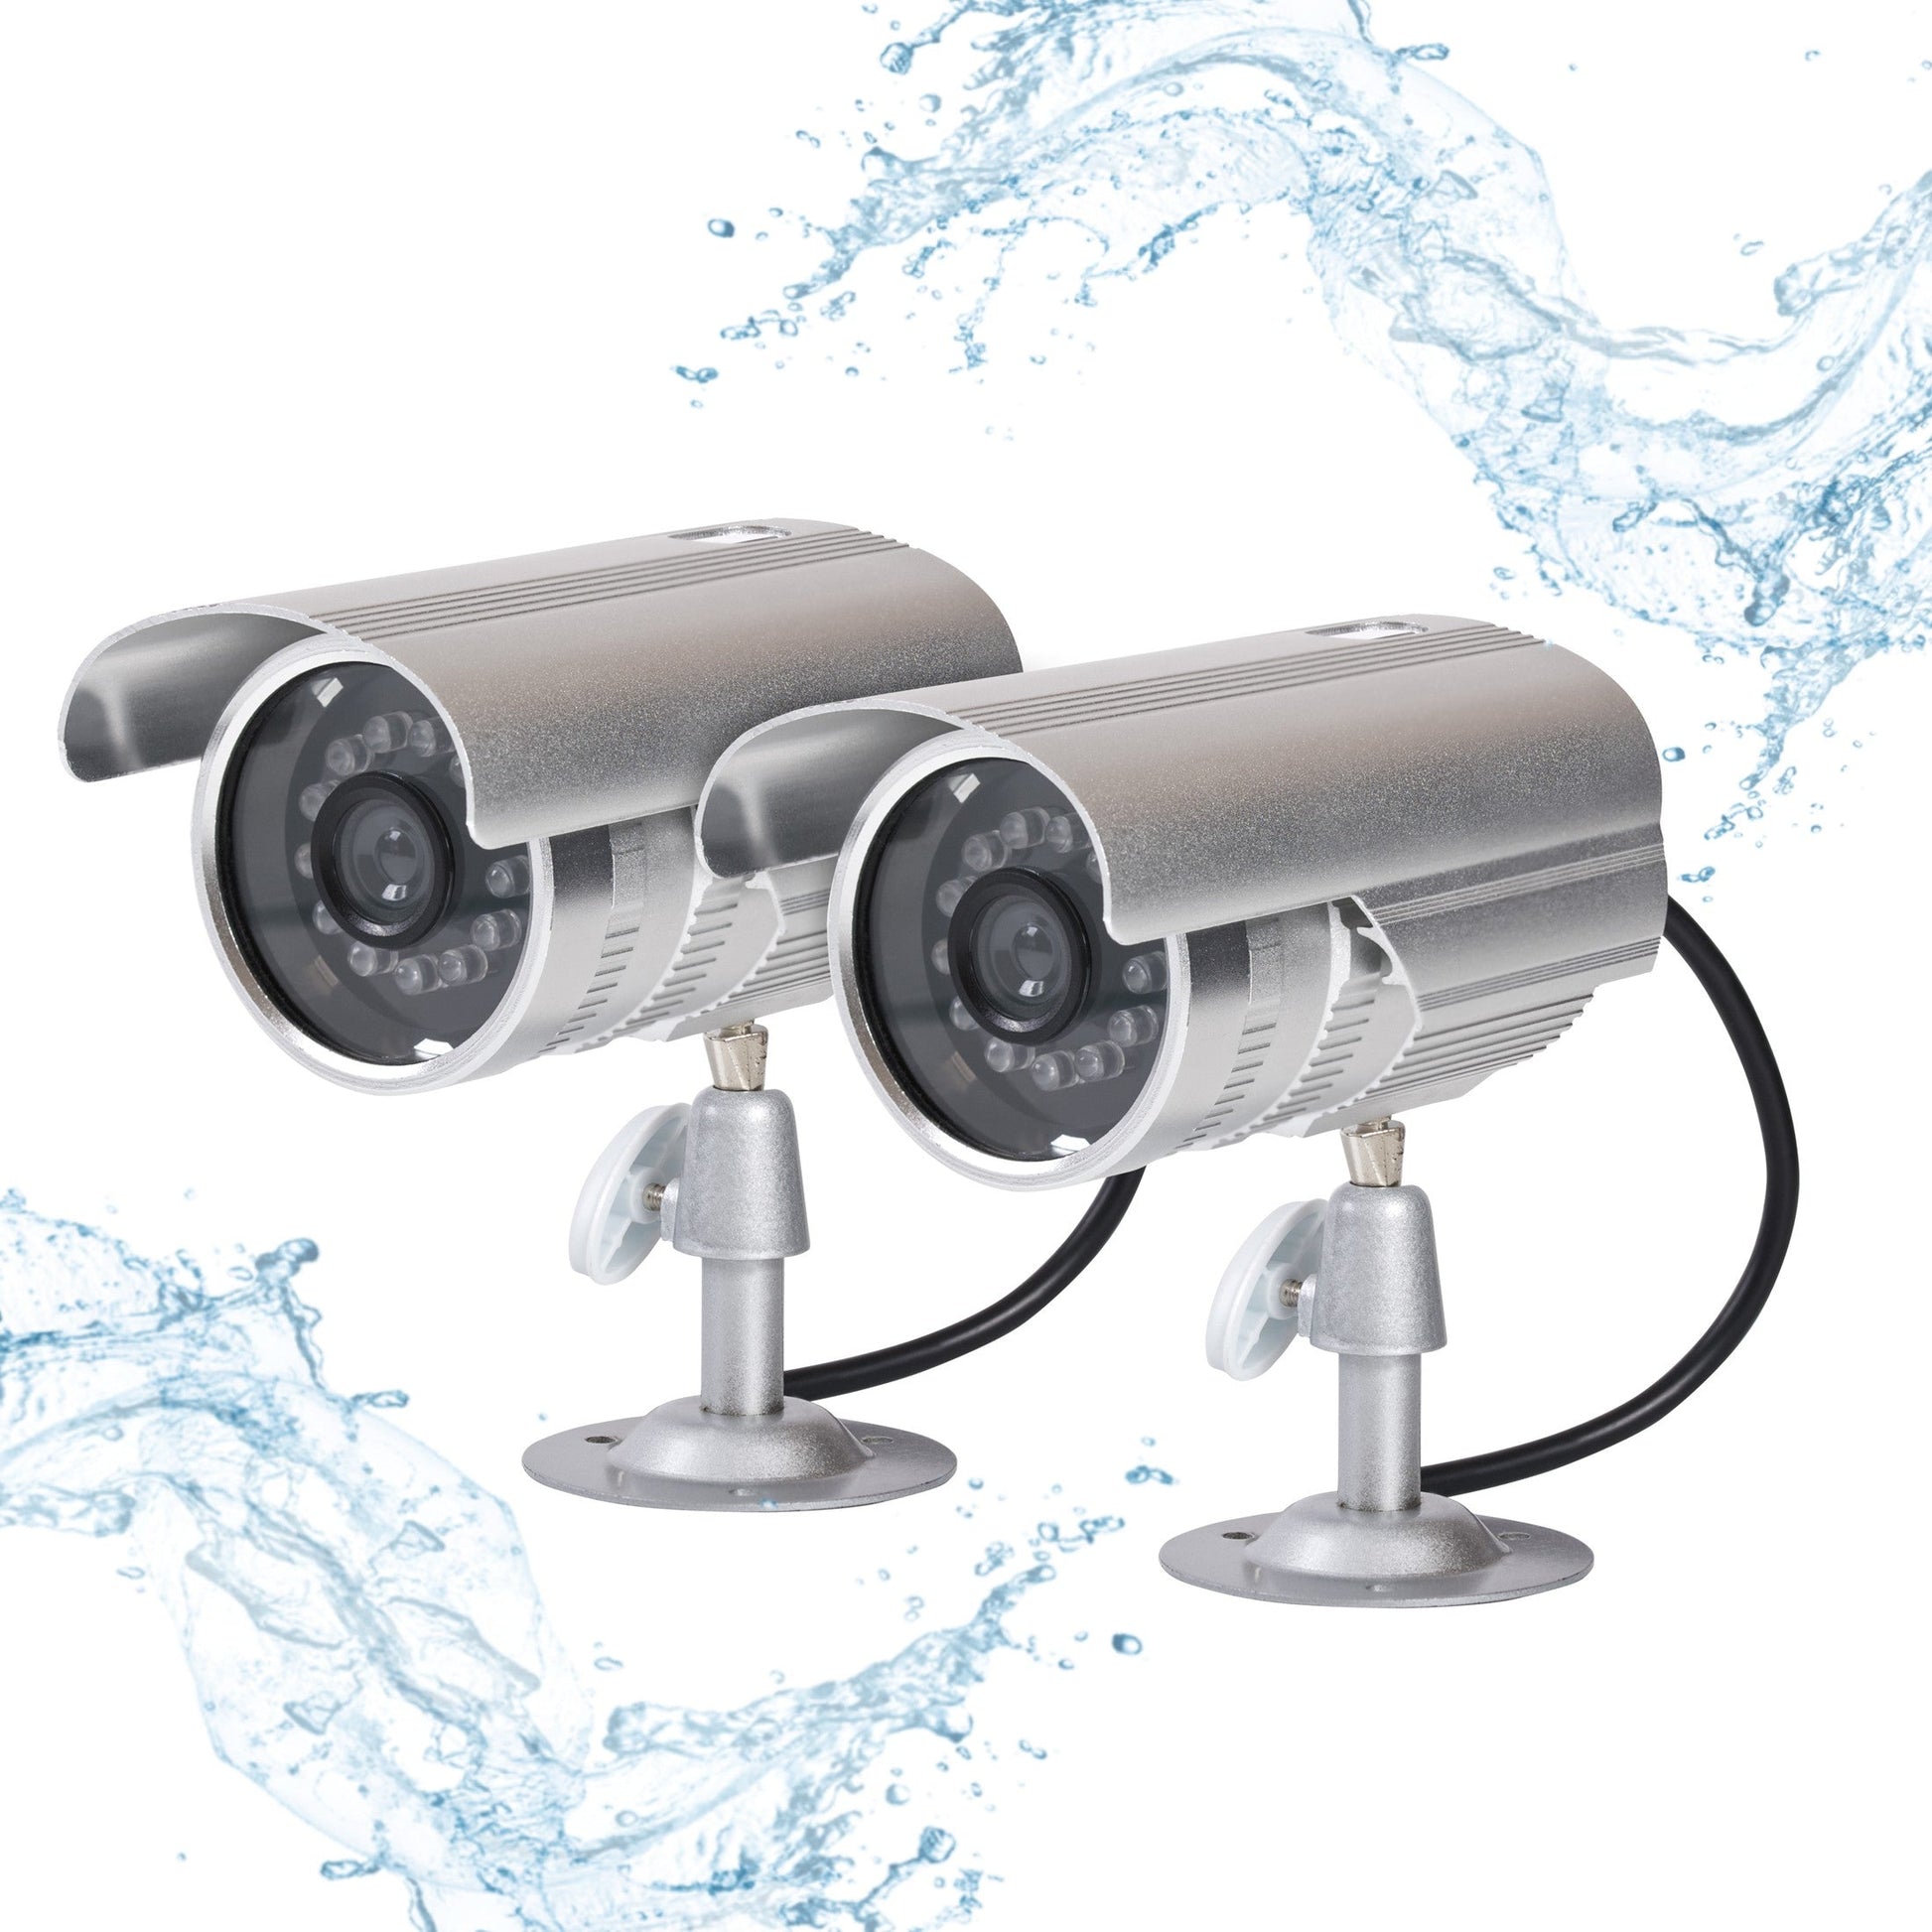 ProperAV Replica Security Camera Kit with 2x Aluminium Cameras - maplin.co.uk